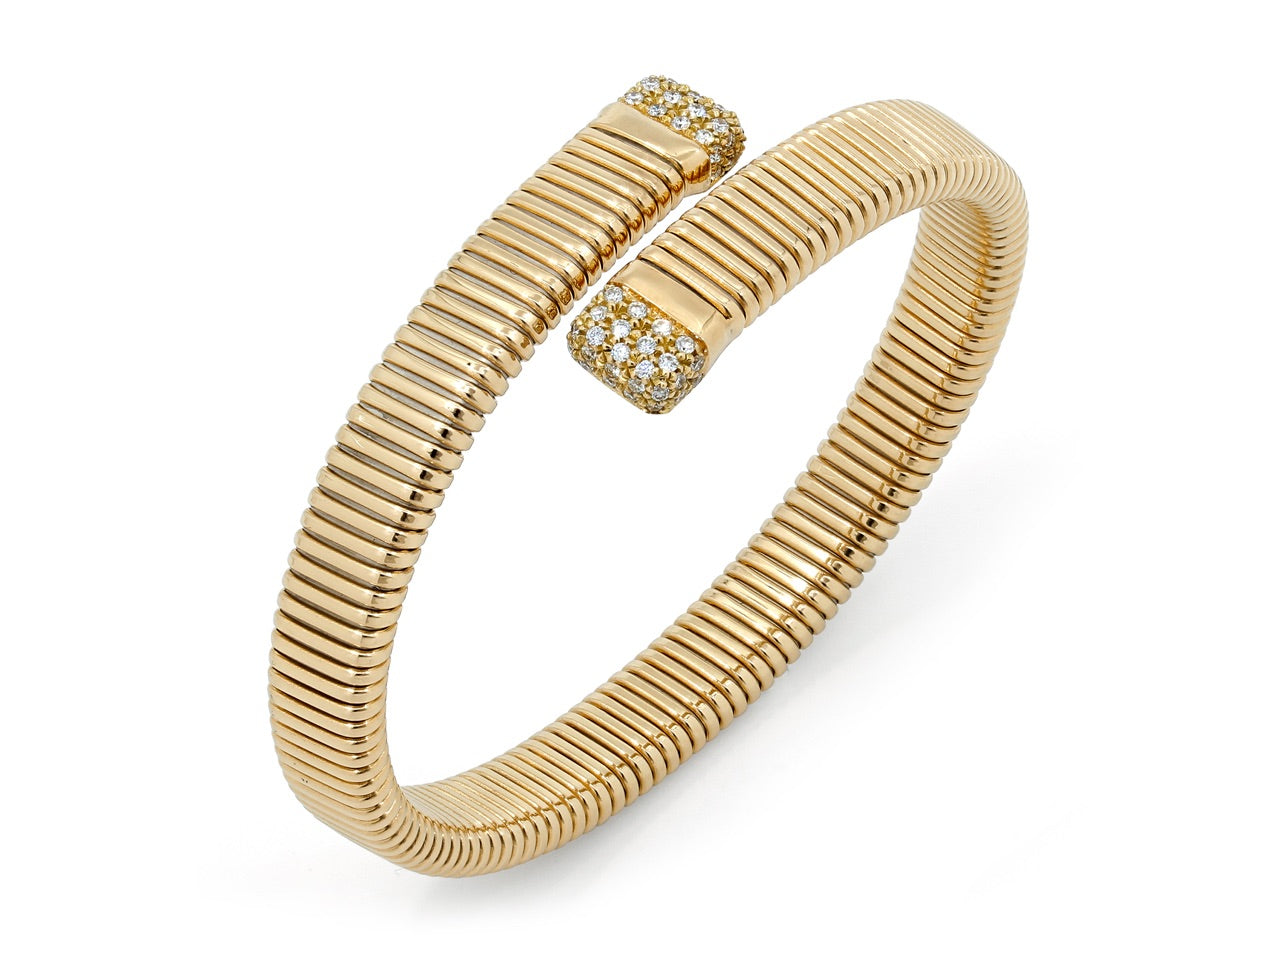 Tubogas Bypass Bracelet with Diamonds, Medium, by Beladora, in 18K Gold